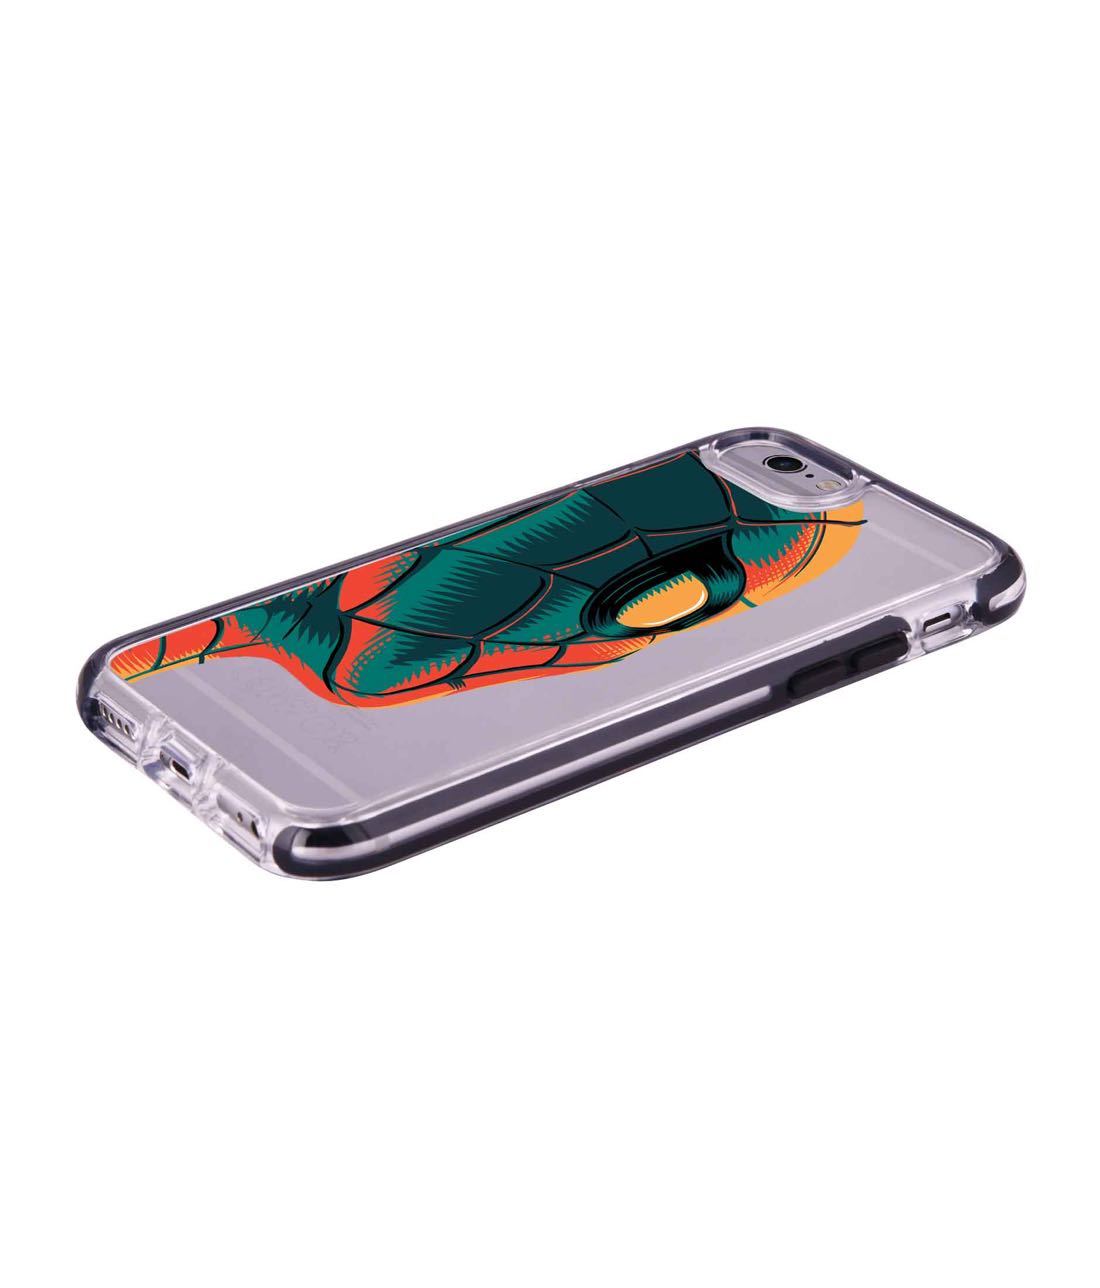 Illuminated Spiderman - Extreme Phone Case for iPhone 6 Plus